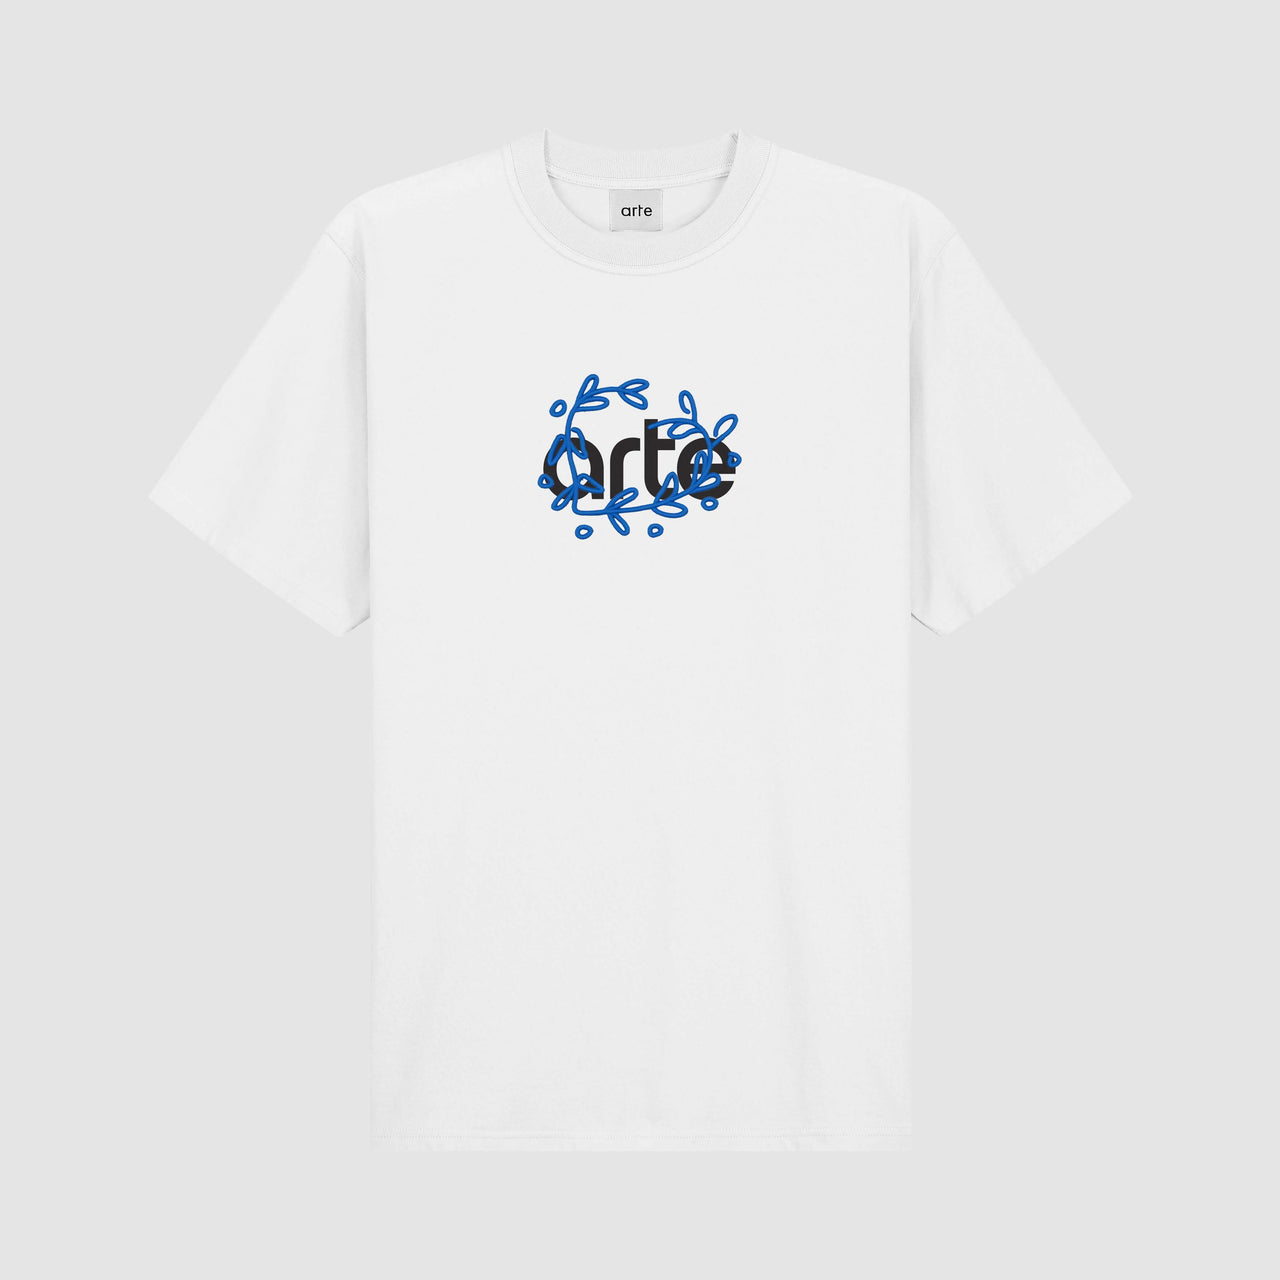 Teo Arte Front T-Shirt - White